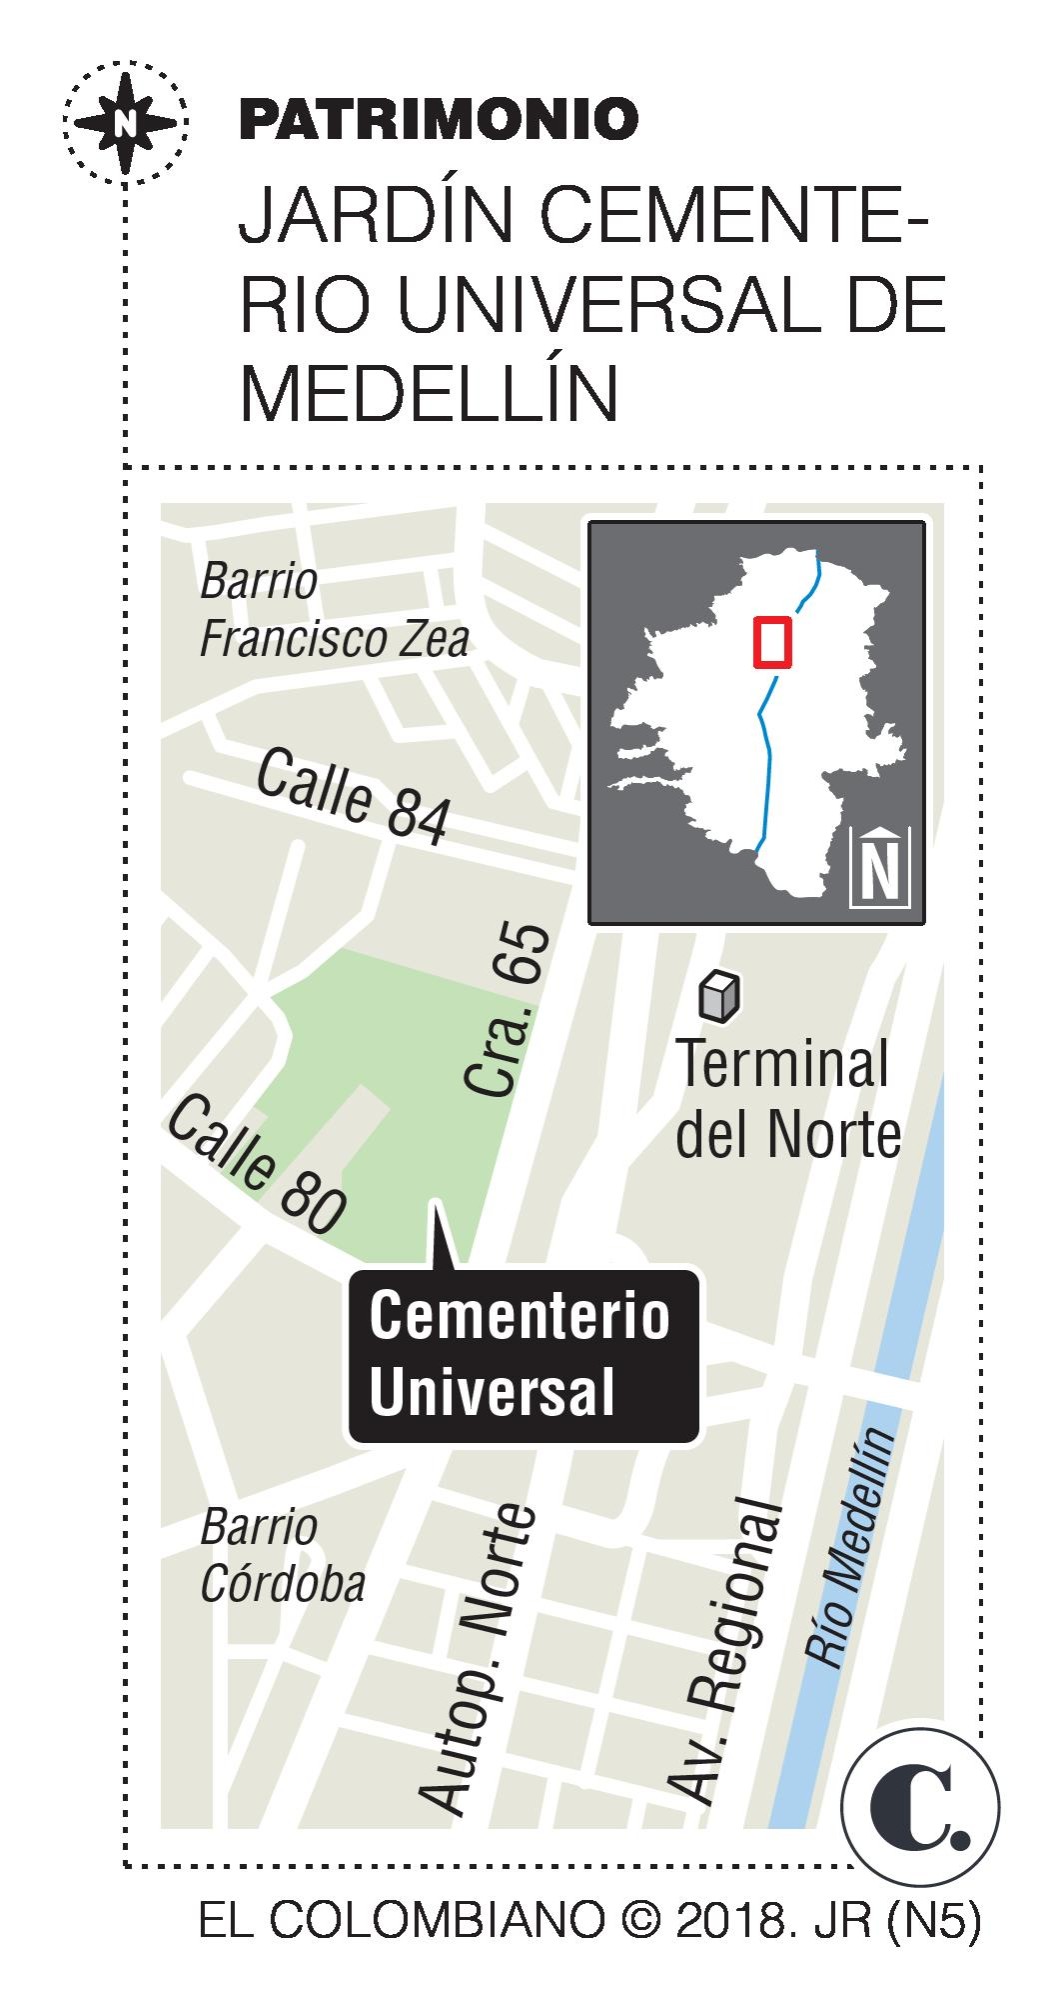 Cementerio Universal recibirá apoyo internacional